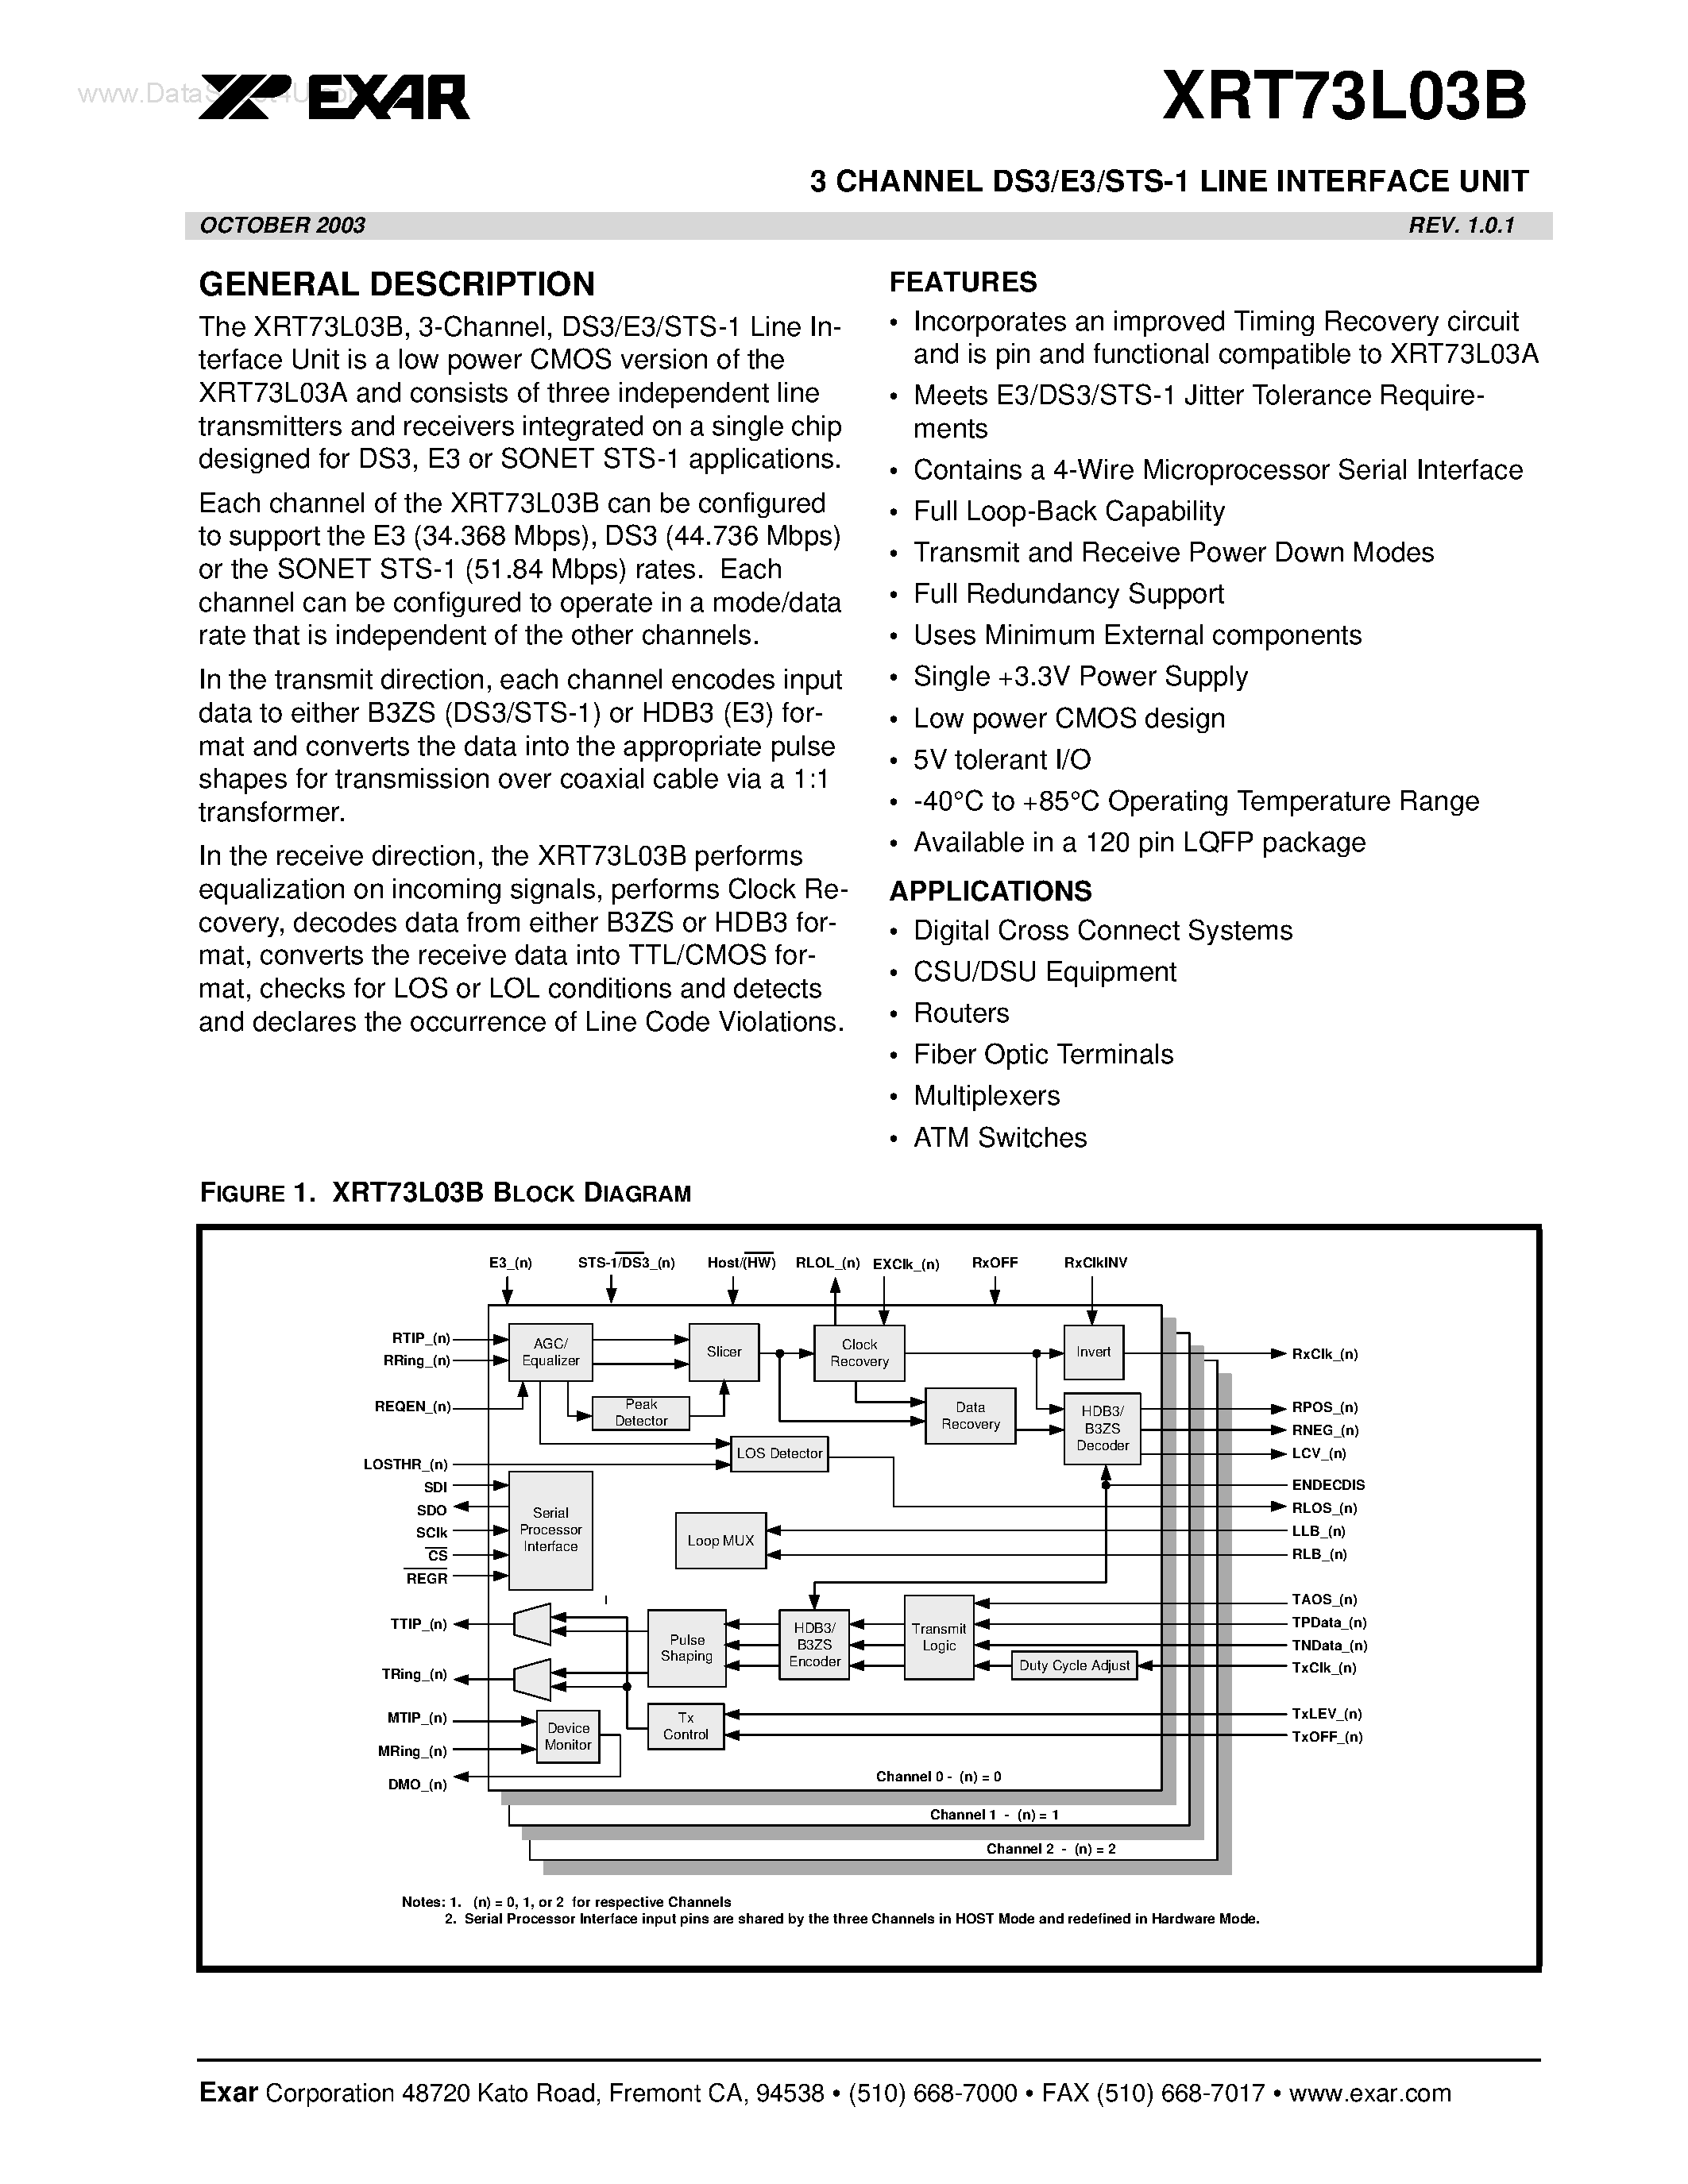 Datasheet XRT73L03B - 3 CHANNEL DS3/E3/STS-1 LINE INTERFACE UNIT page 1